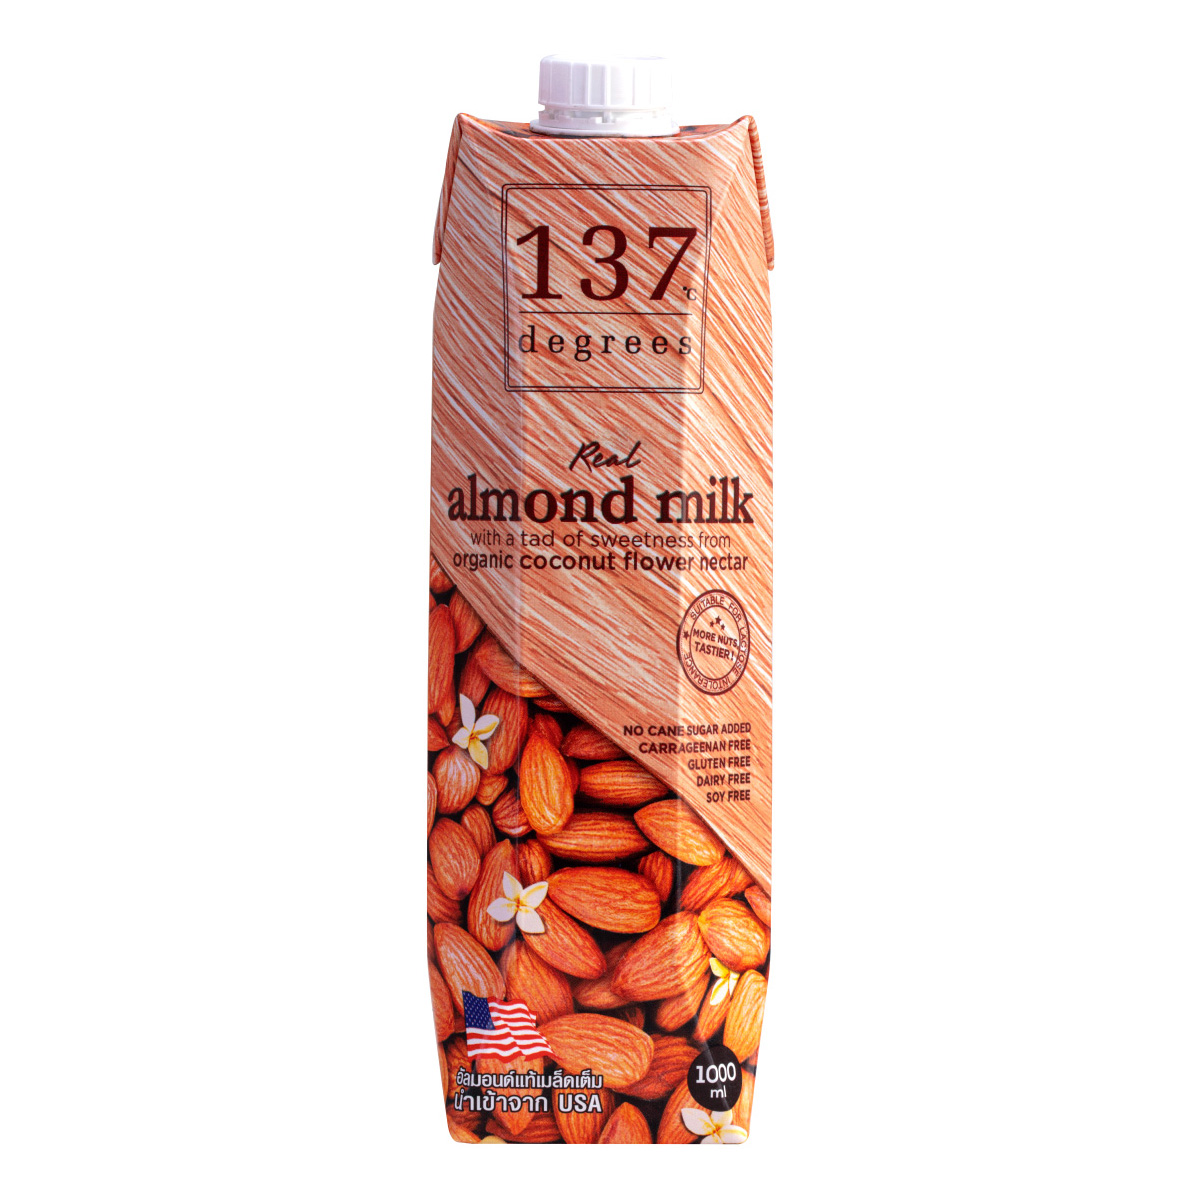 137 degrees Almond Milk Original